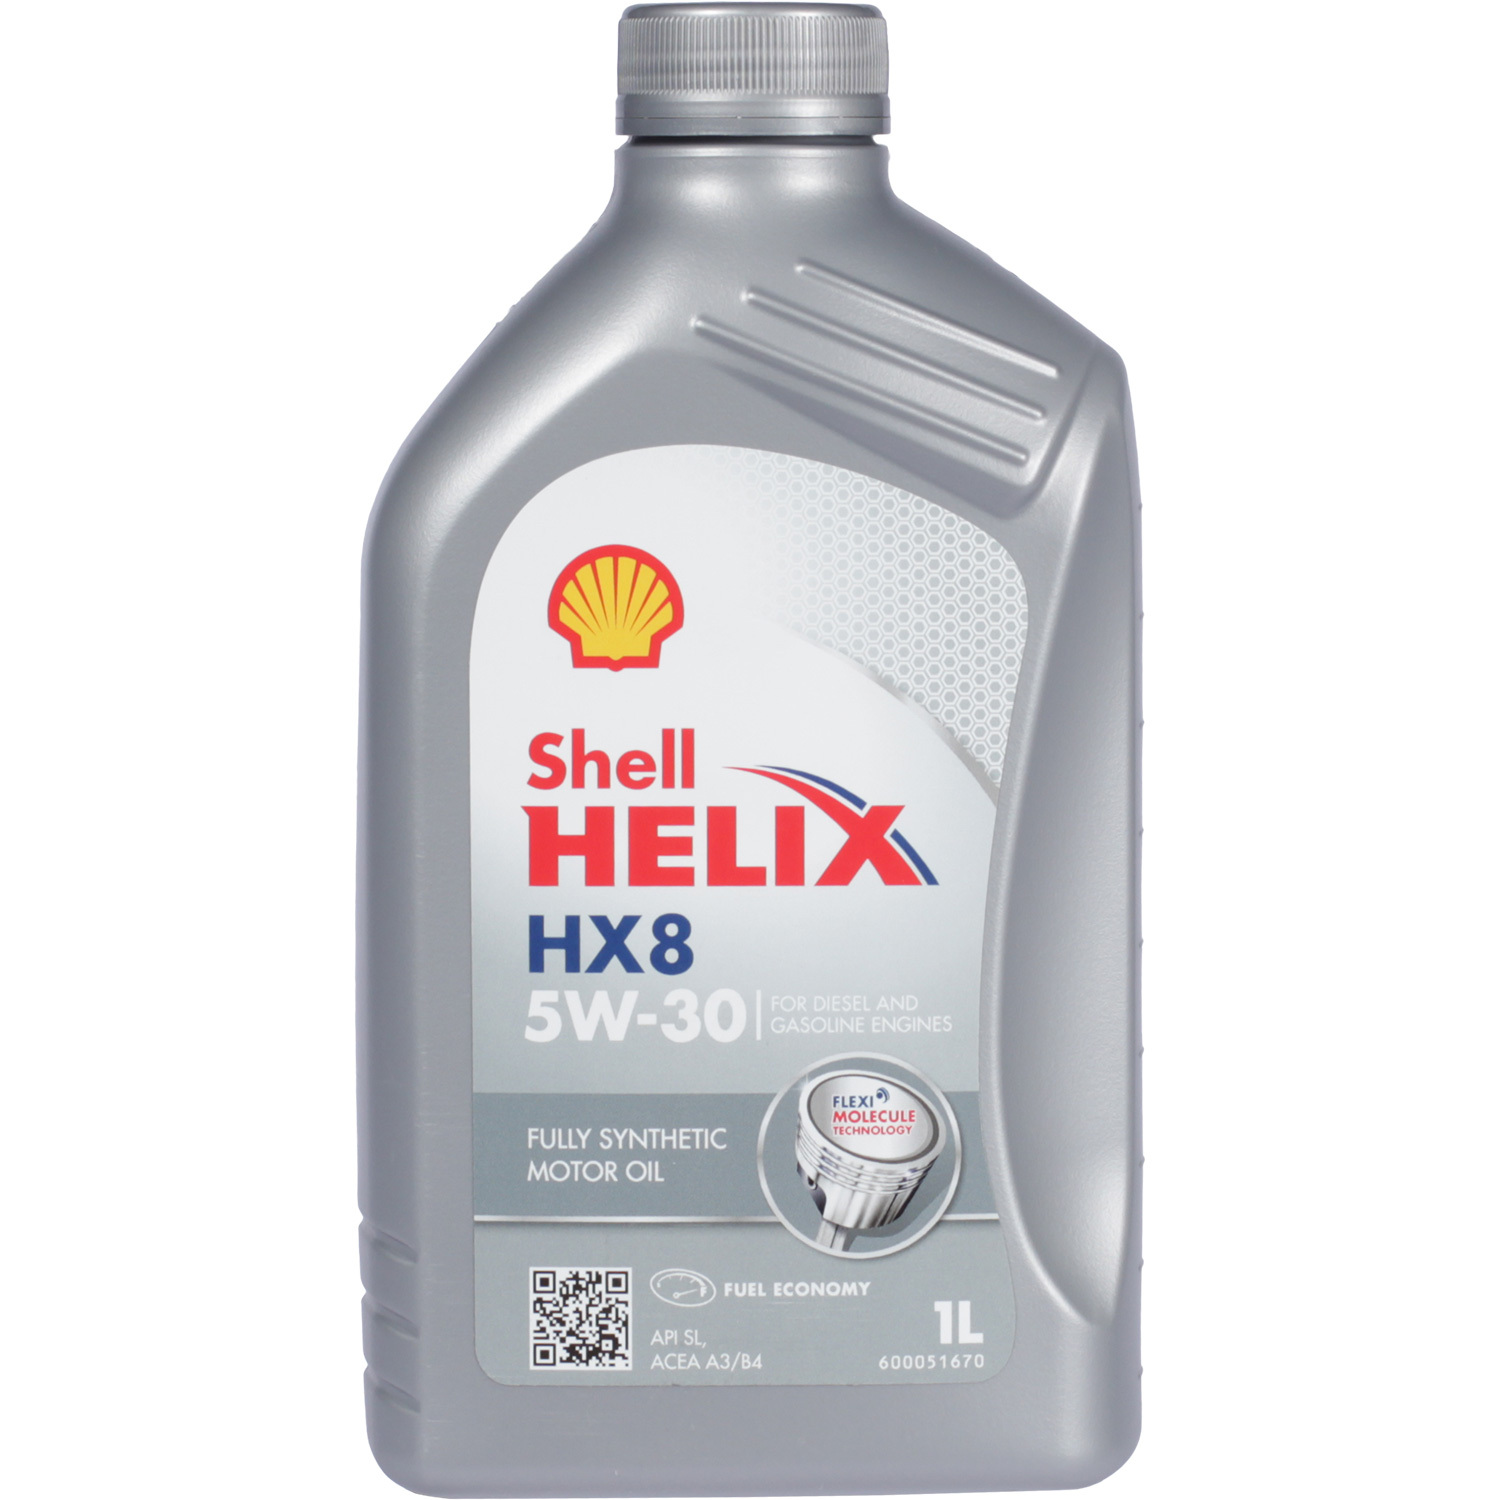 Shell Моторное масло Shell Helix HX8 5W-30, 1 л цена и фото